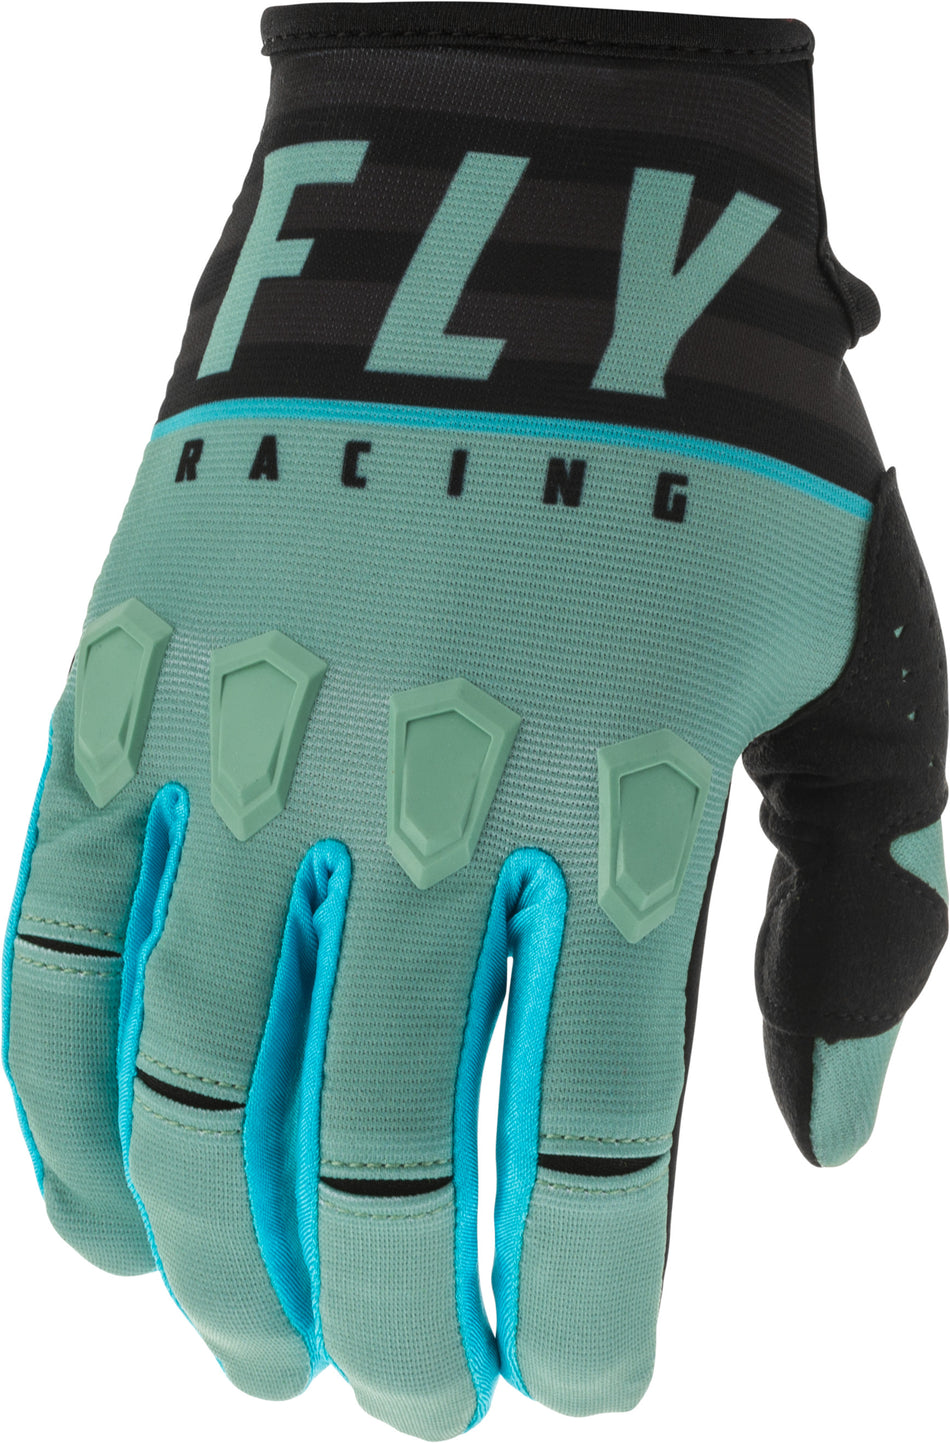 FLY RACING Kinetic K120 Gloves Sage Green/Black Sz 12 373-41612